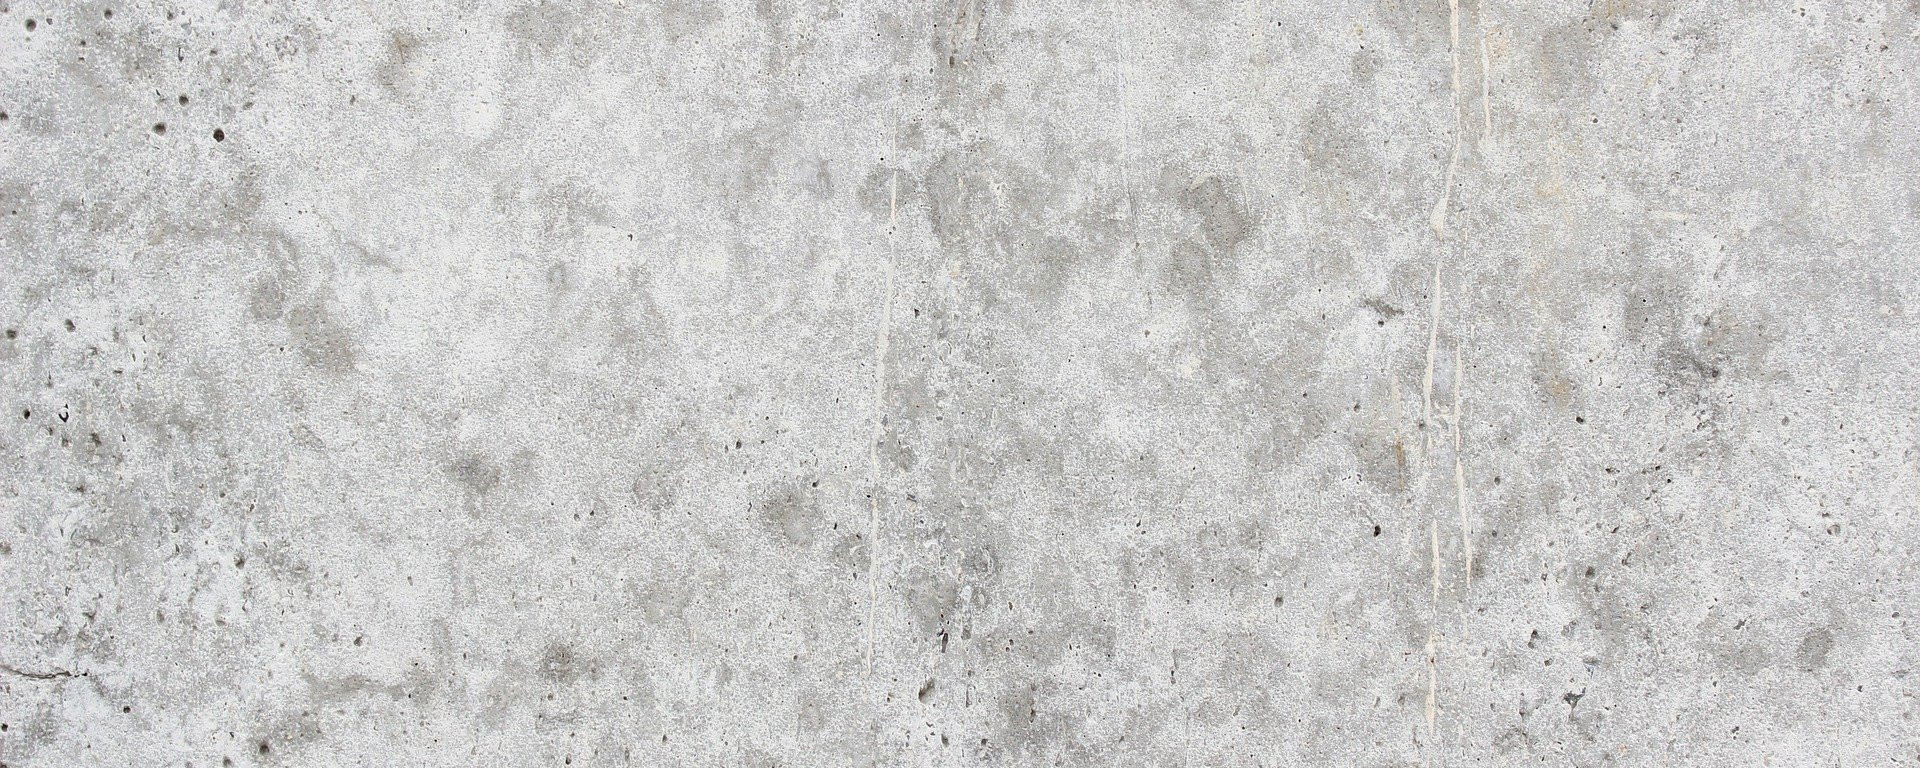 concrete-1646788_1920.jpg